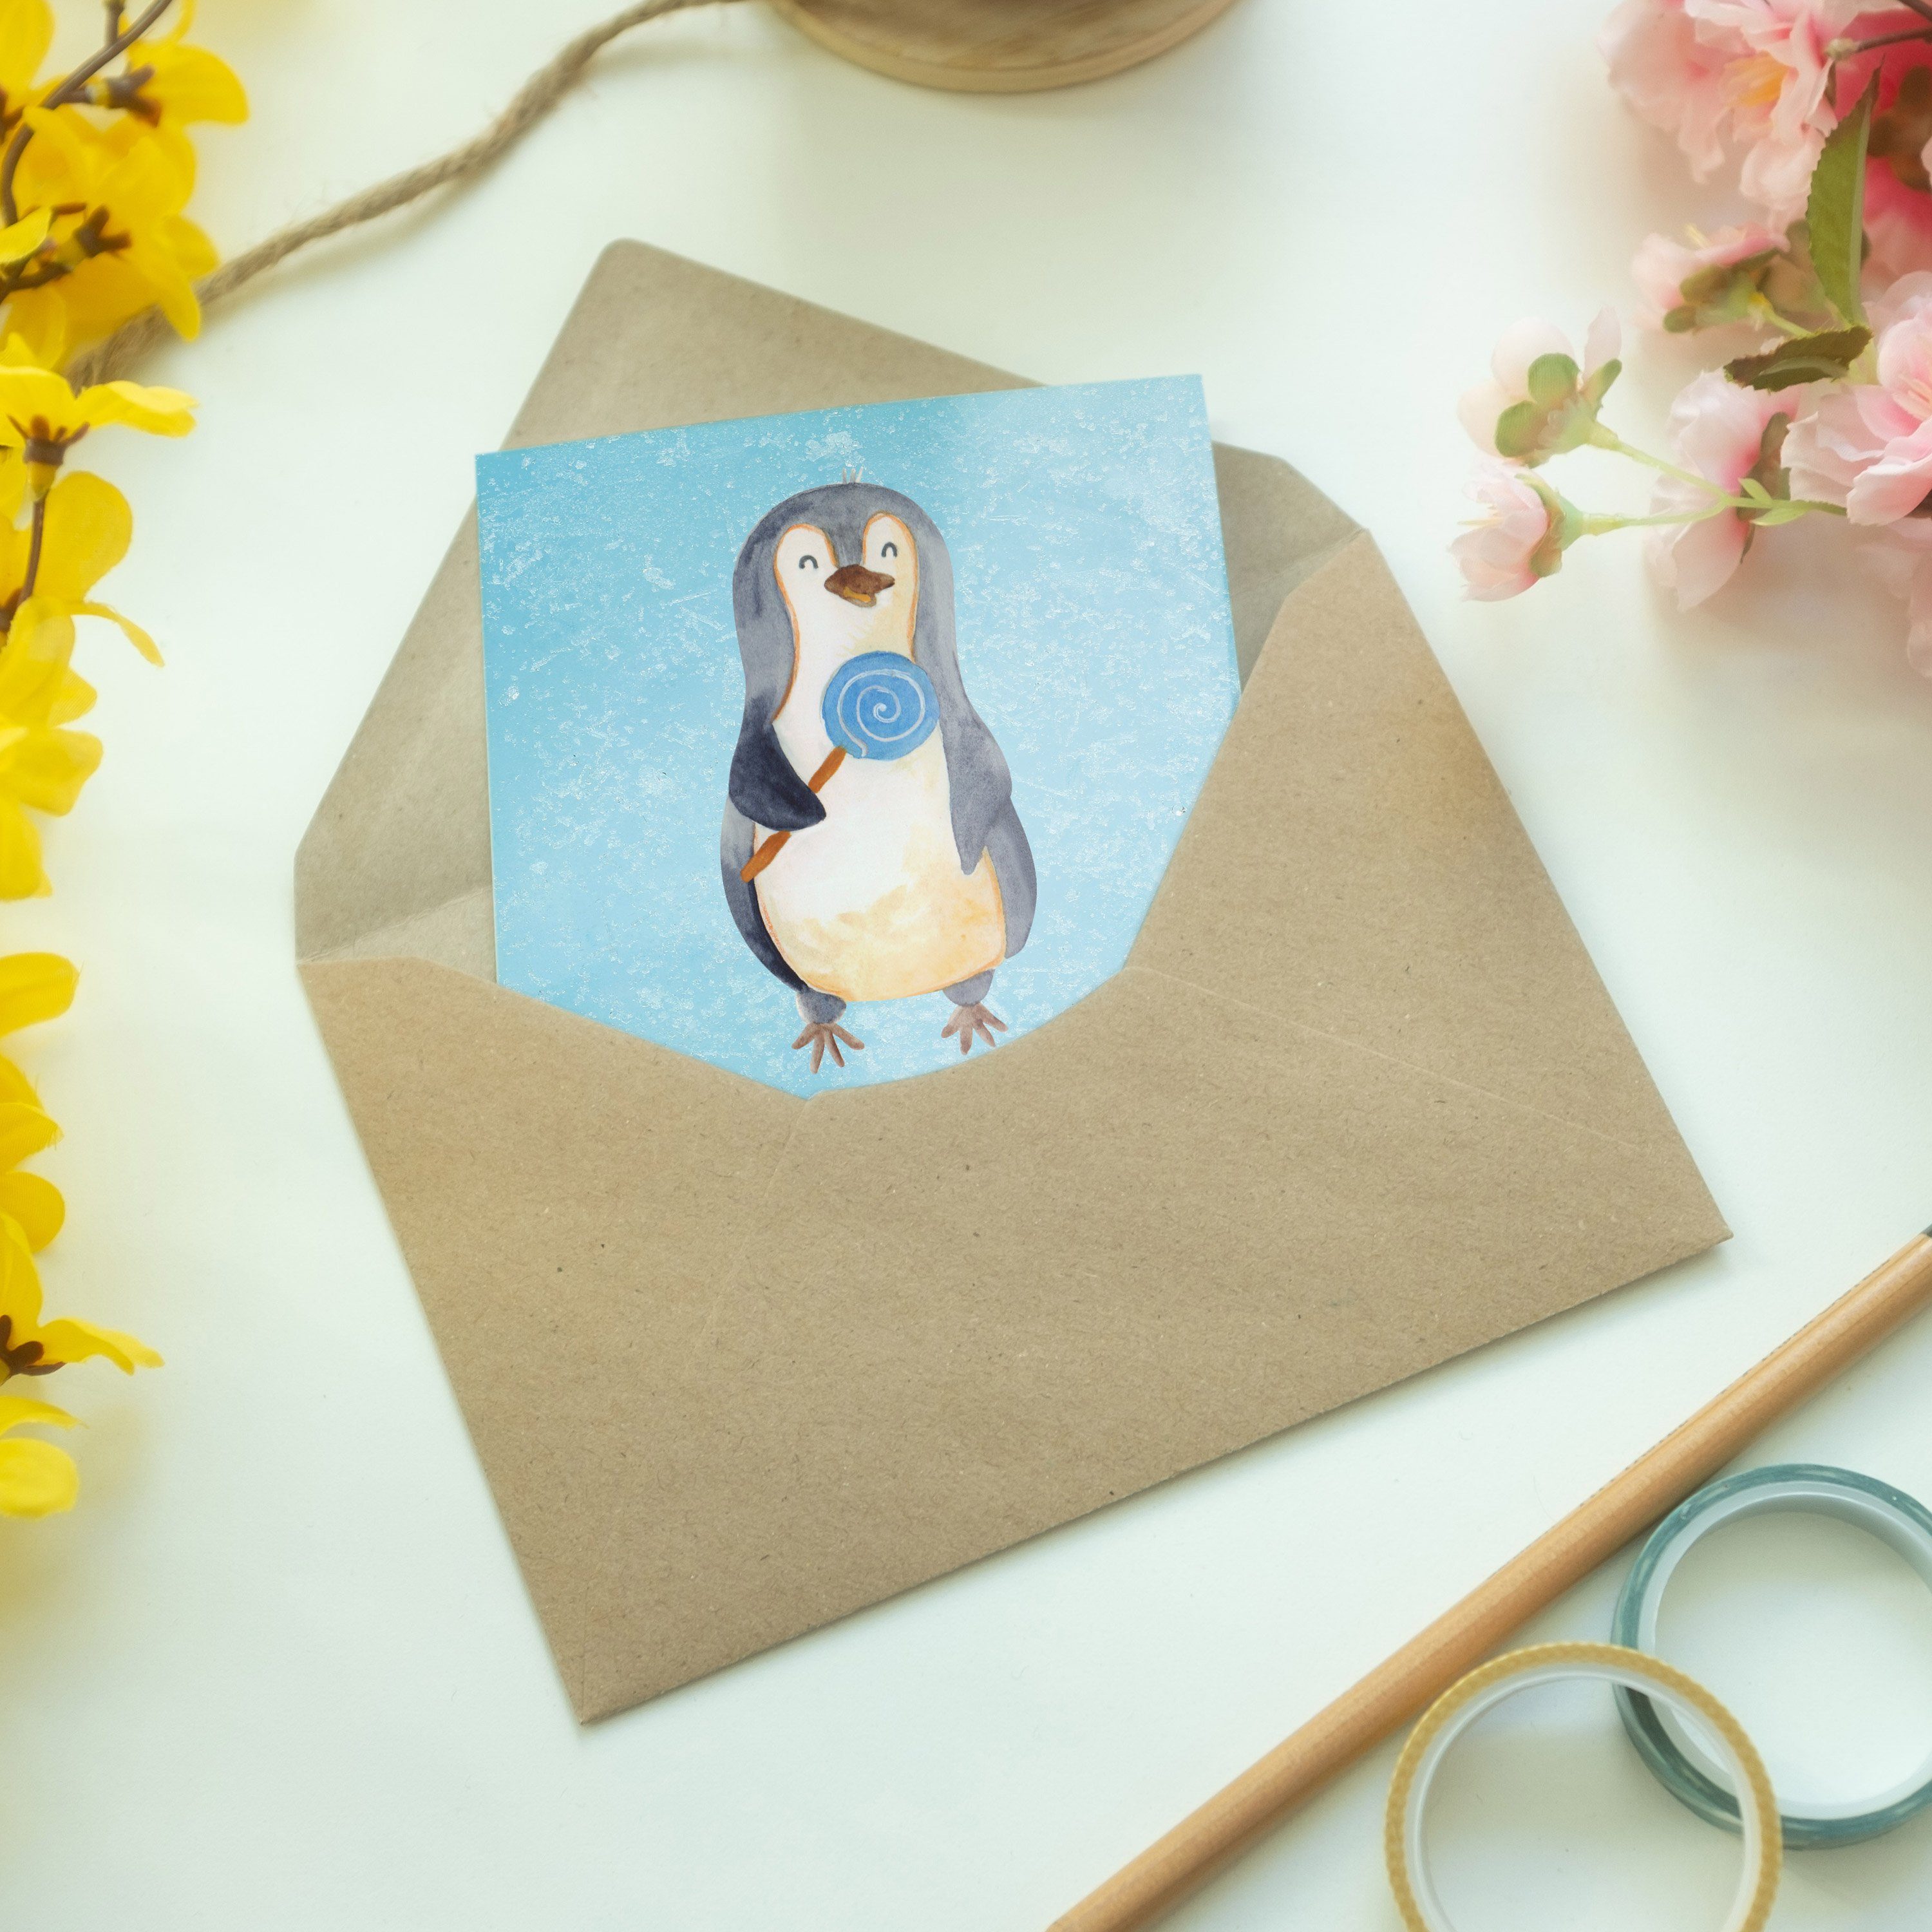 Mr. & Mrs. Panda Grußkarte Eisblau Lolli Pinguin - - Glückwunsc Einladungskarte, Geschenk, Kind